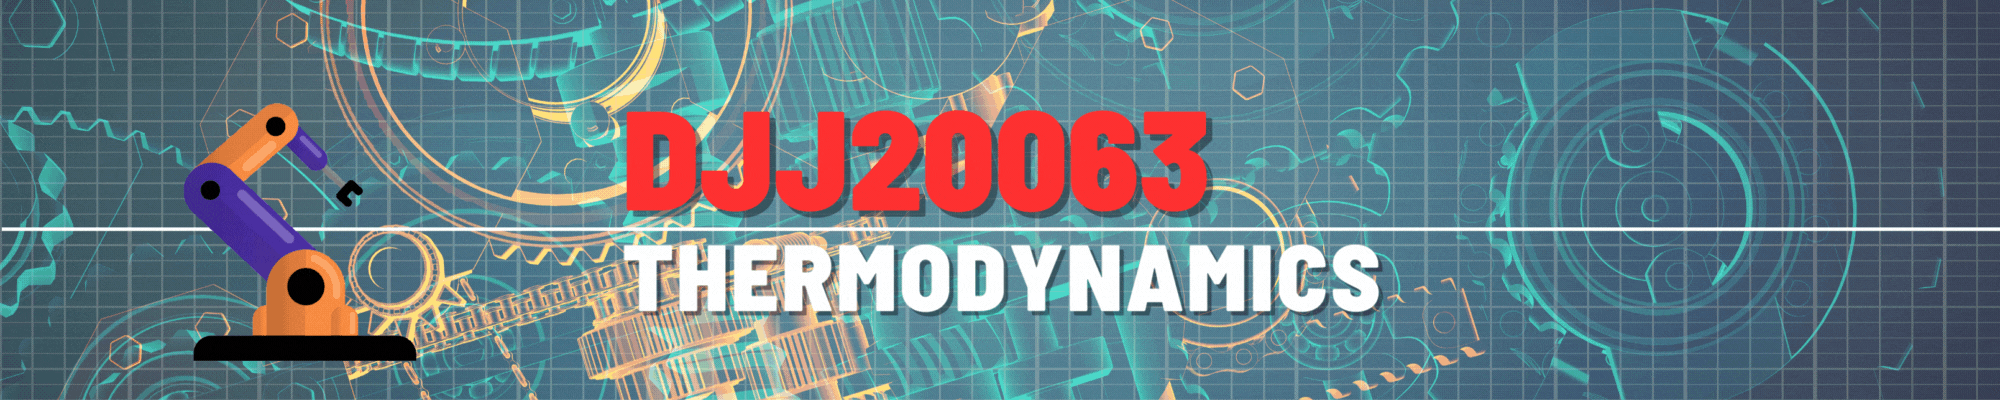 DJJ20063 THERMODYNAMICS